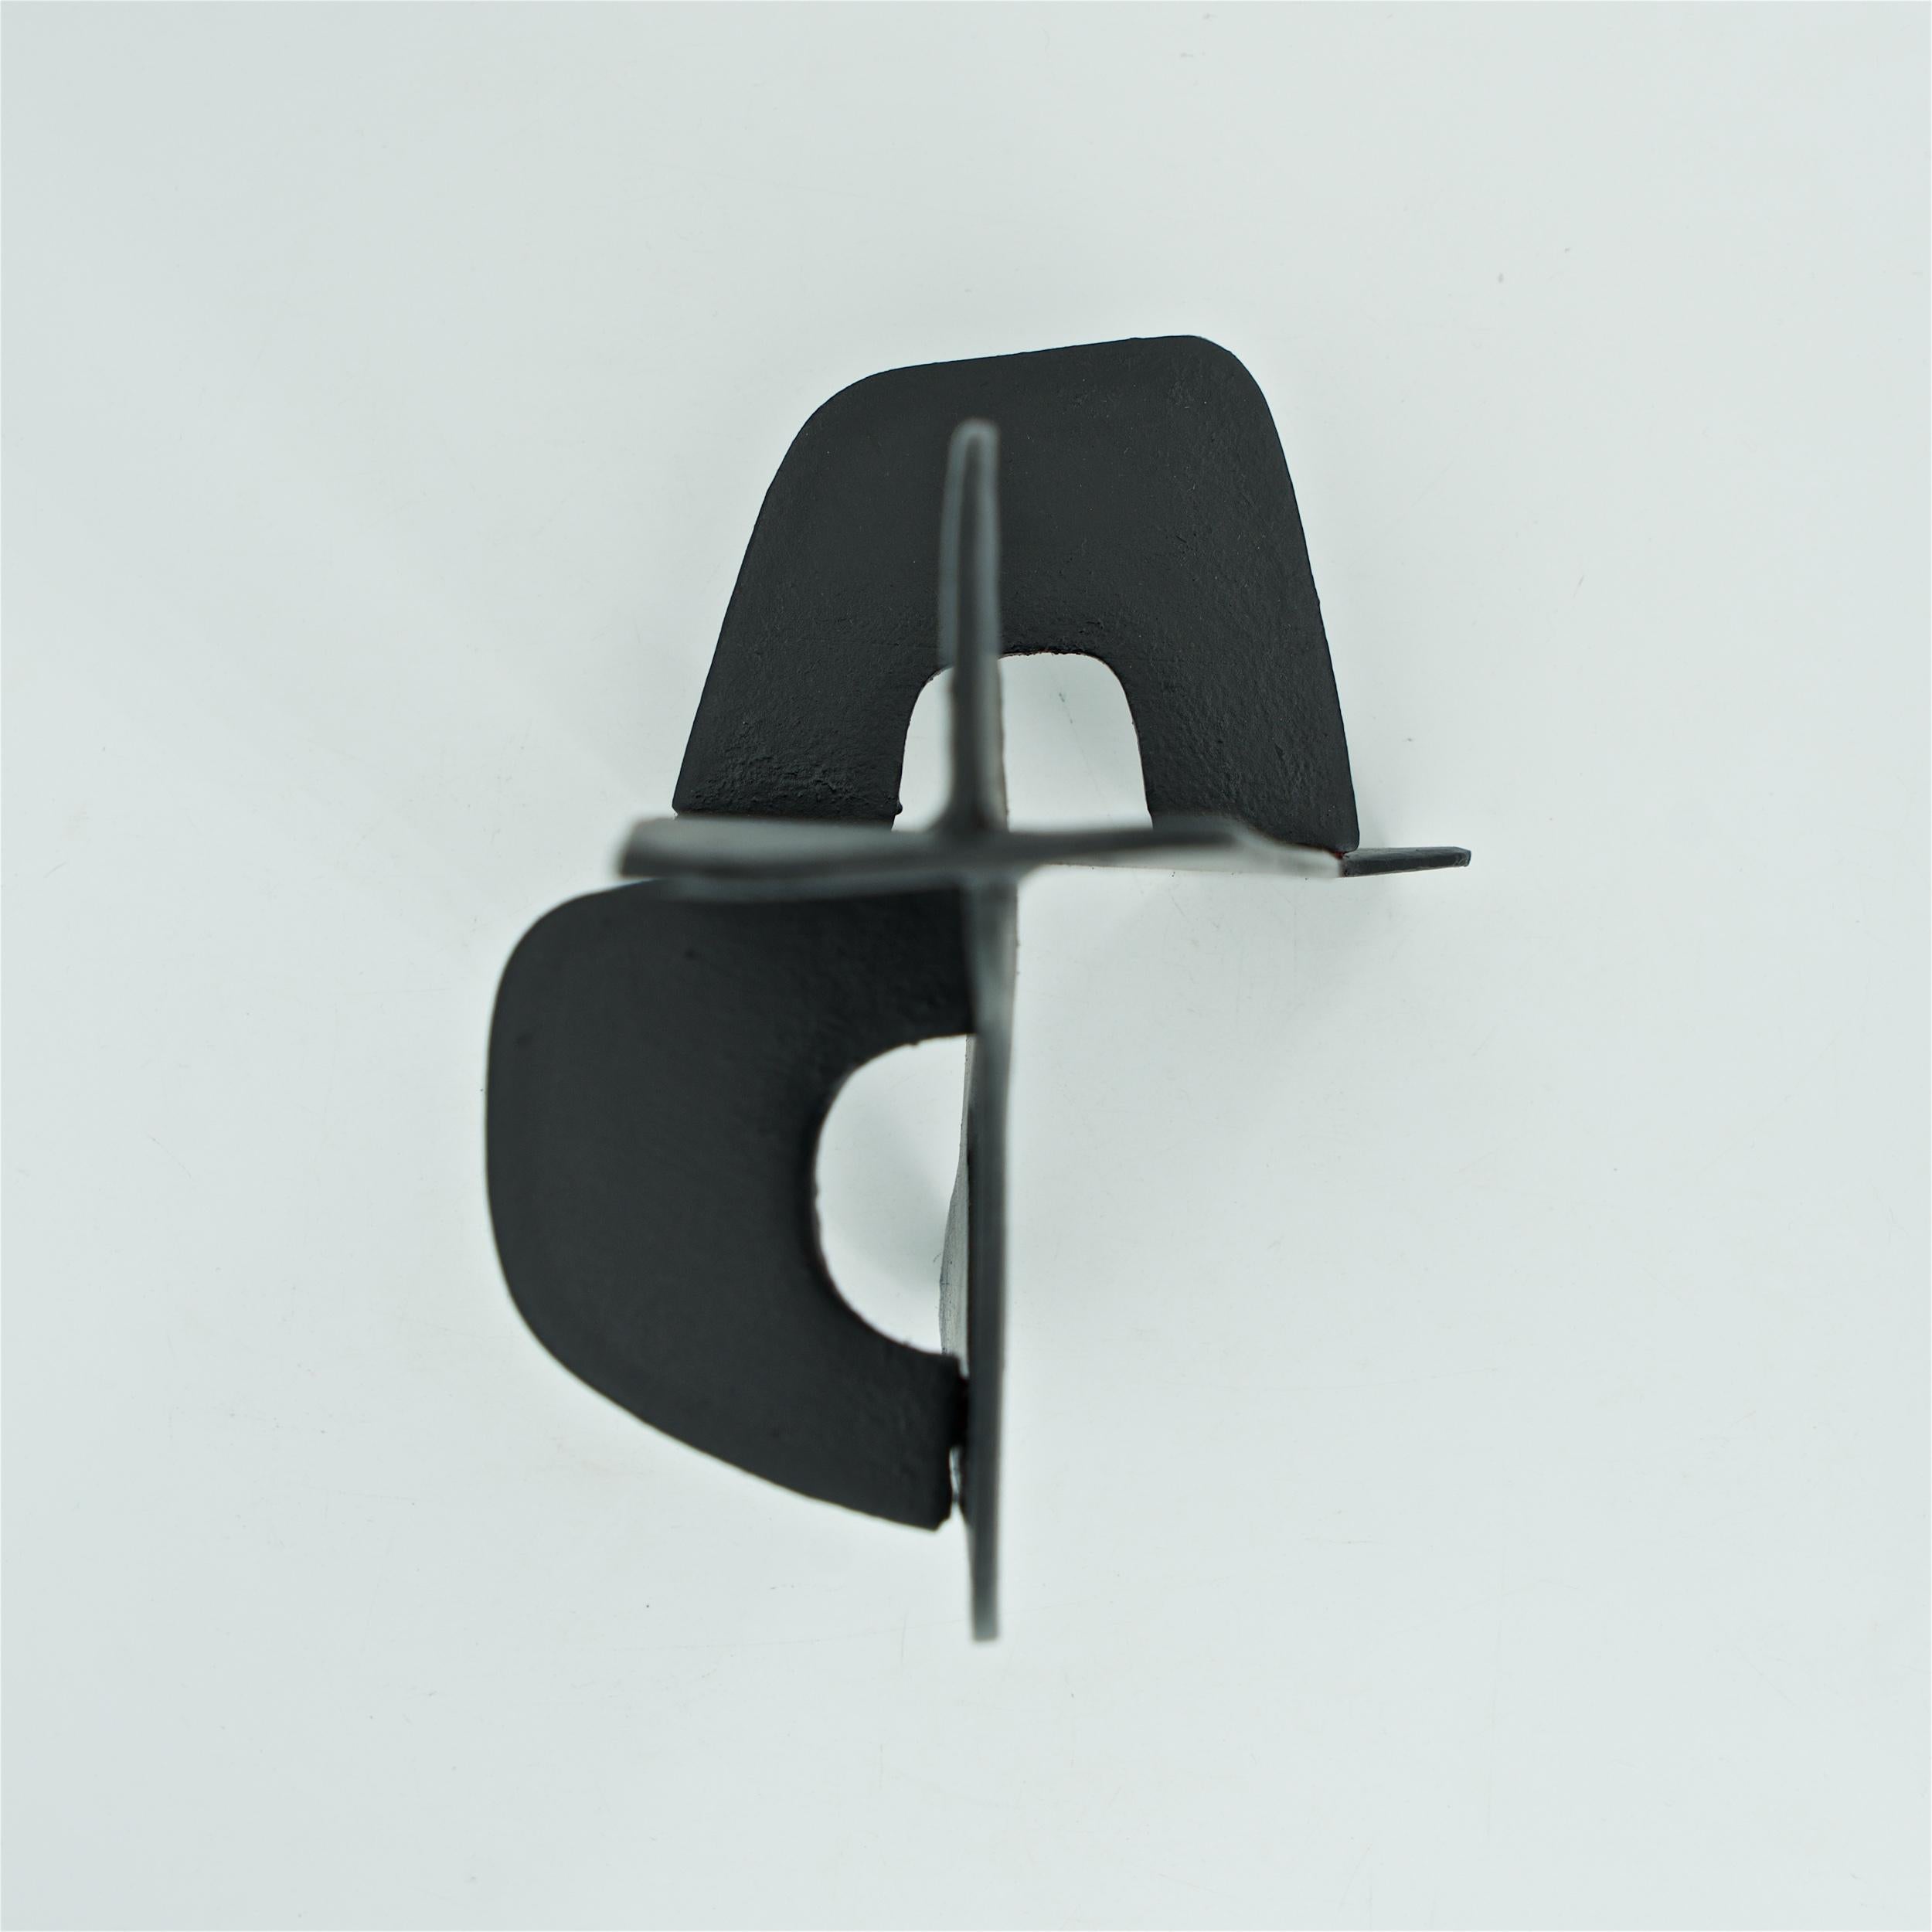 Cut Steel John Paul Philippe Steel Panel Table Sculpture Abstract Alexander Calder Style